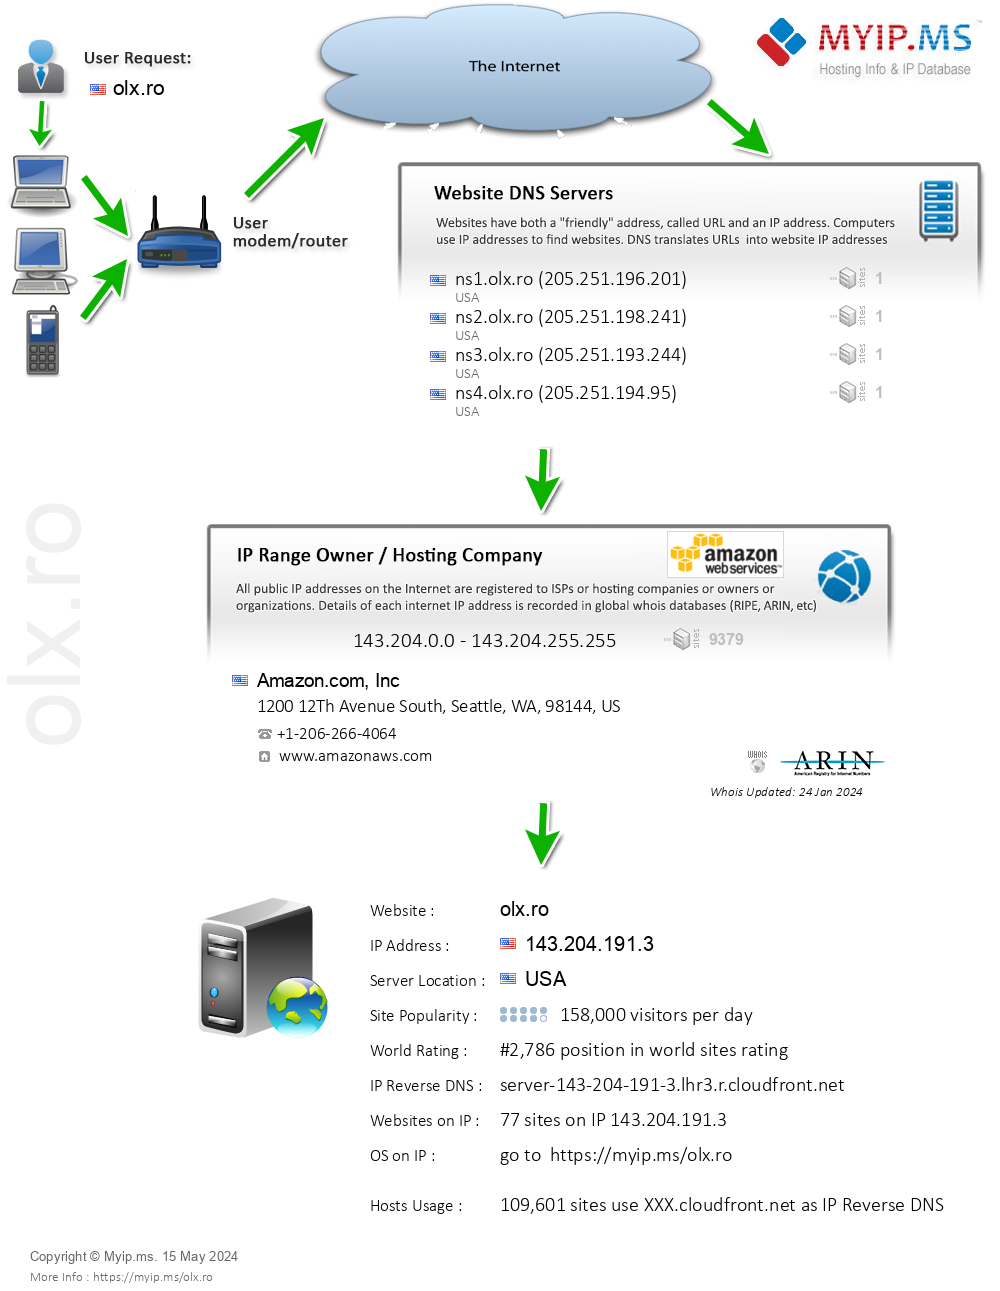 Olx.ro - Website Hosting Visual IP Diagram